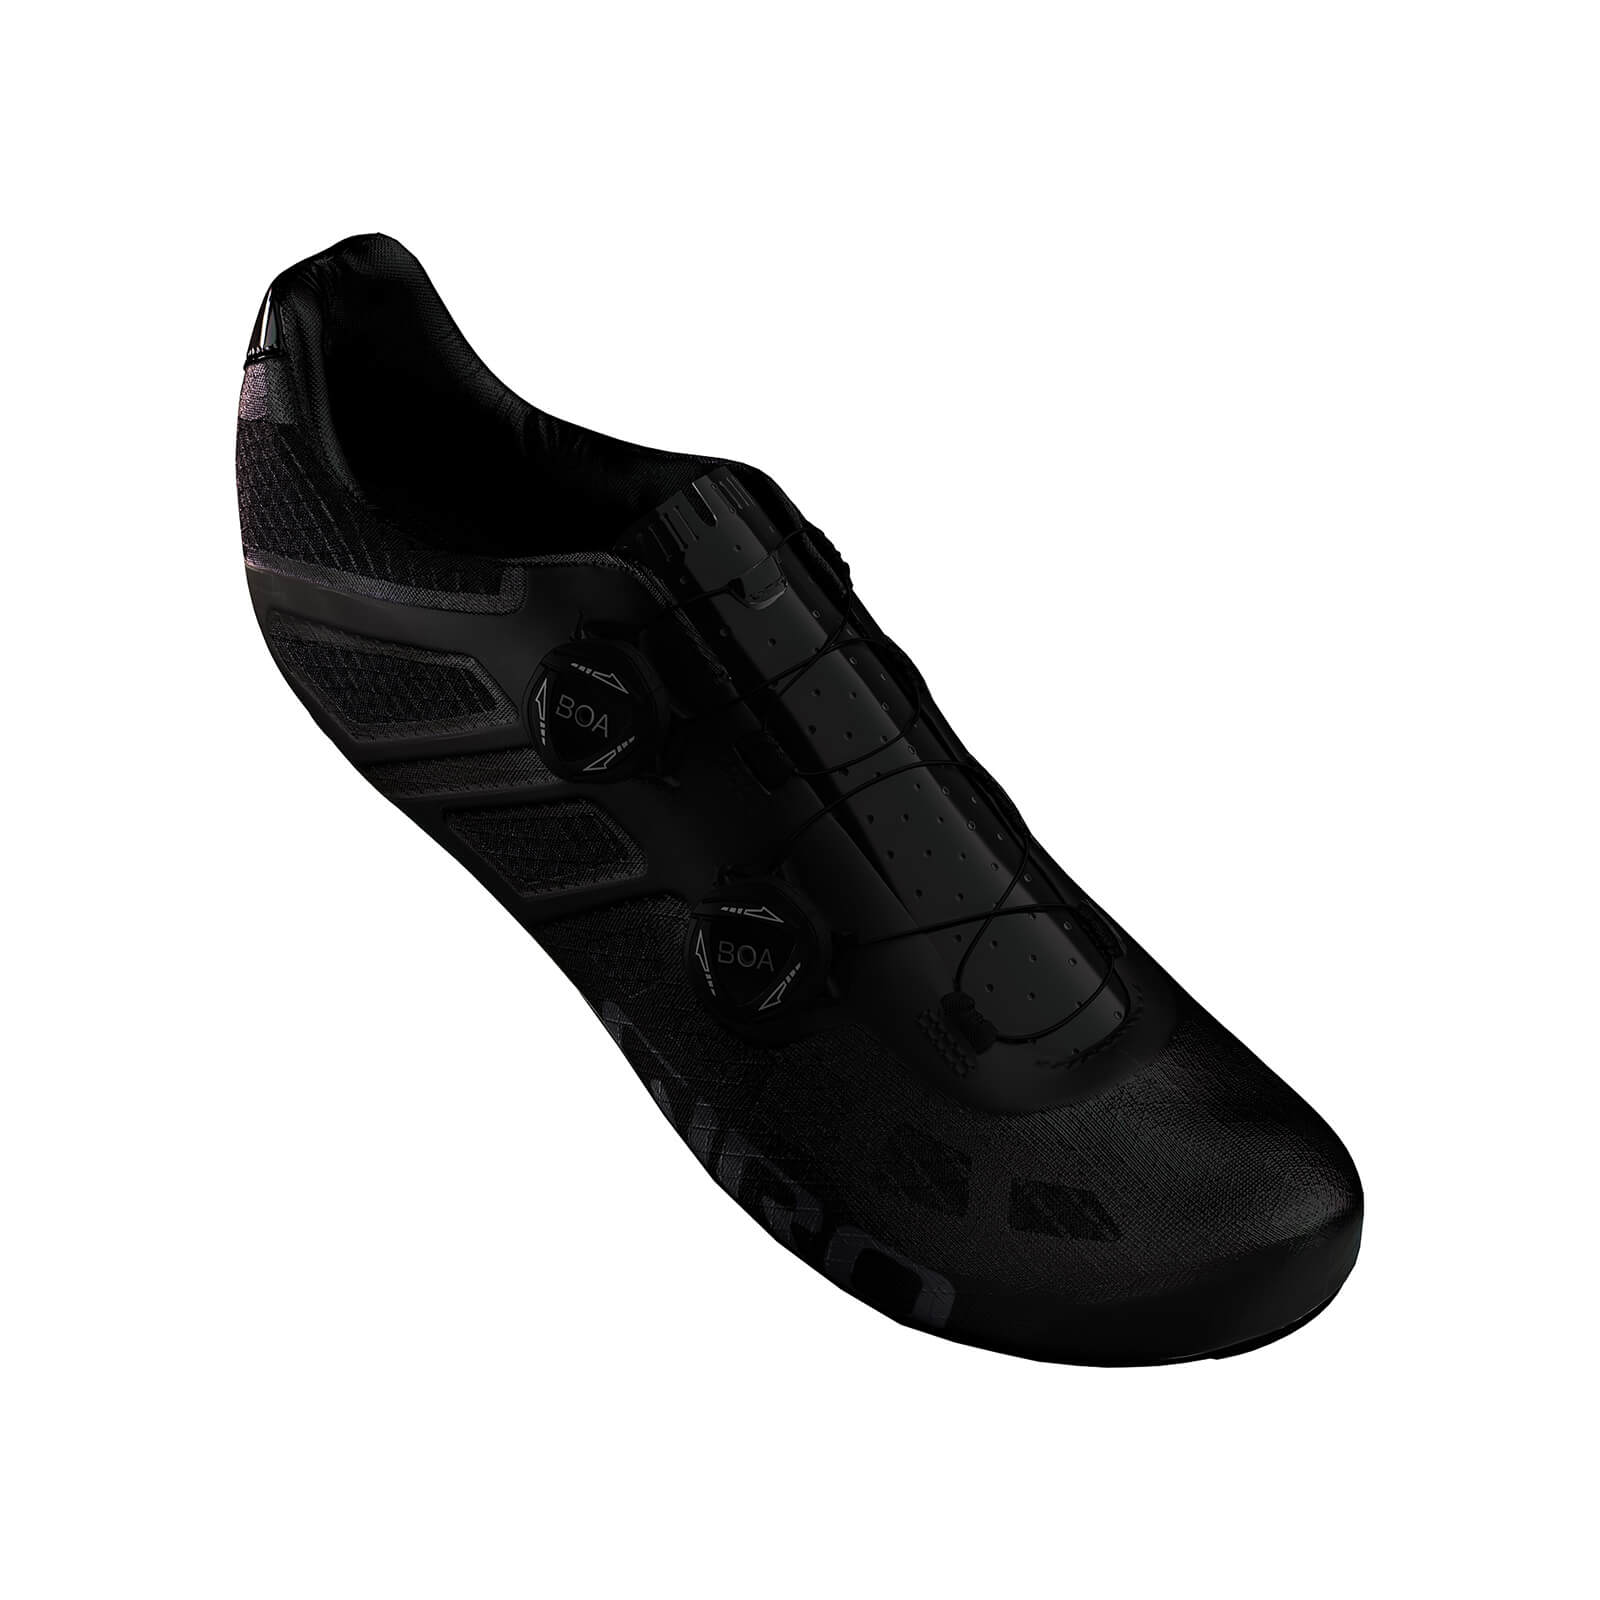 Giro Imperial Road Shoes - EU 44 - Black